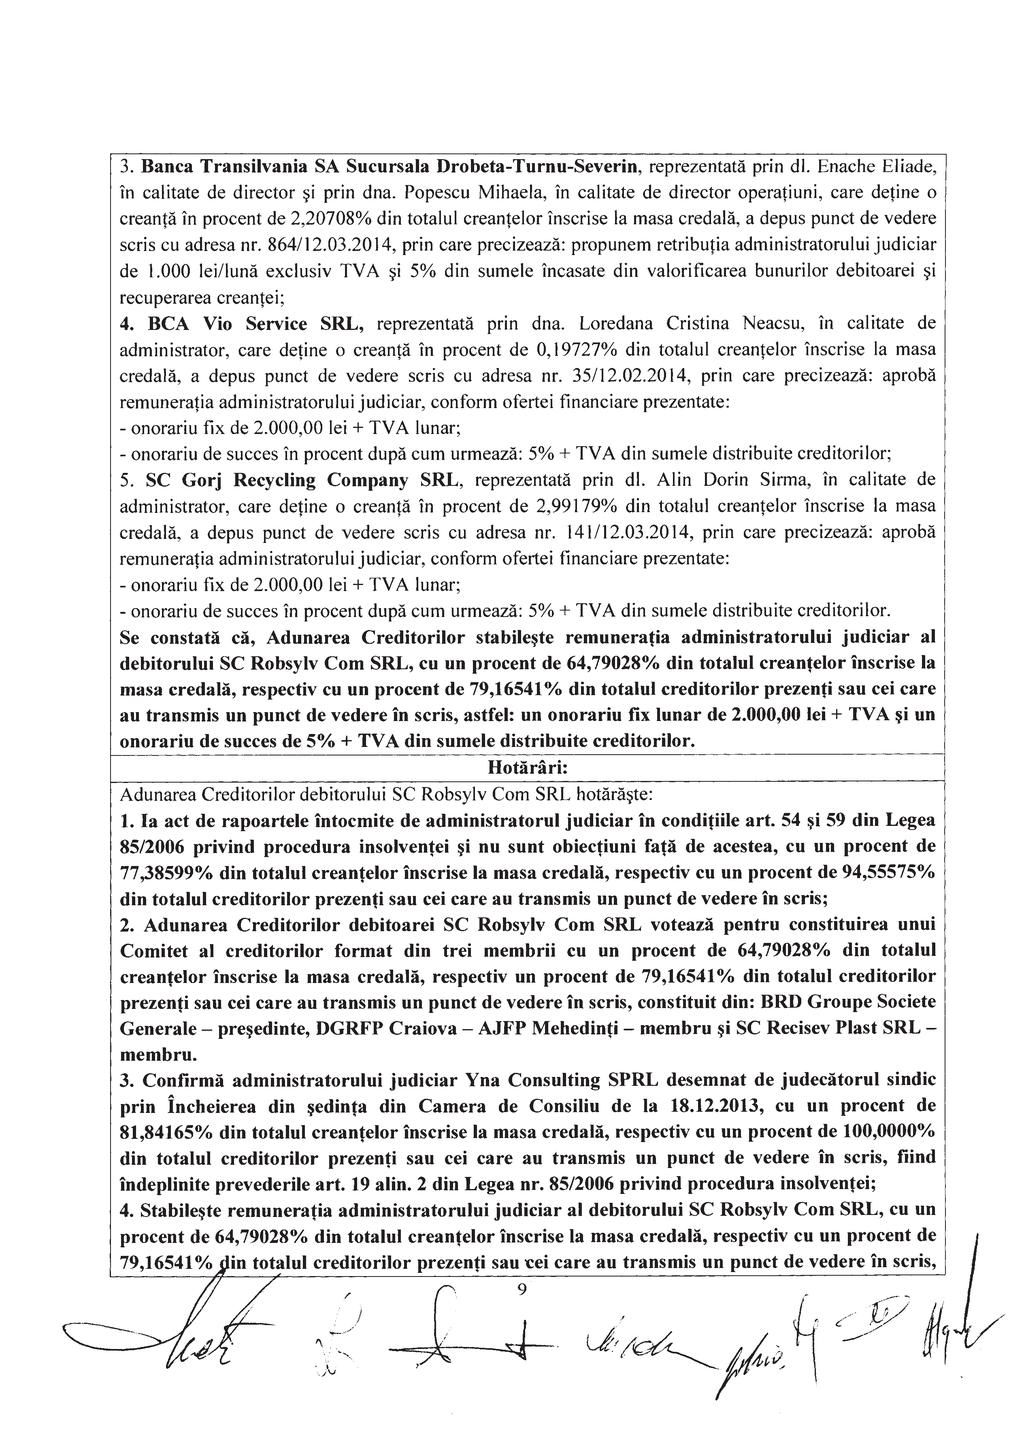 3. Banca Transilvania SA Sucursala Drobeta-Turnu-Severin, reprezentata prin dl. Enache Eliade, in calitate de director i prin dna.